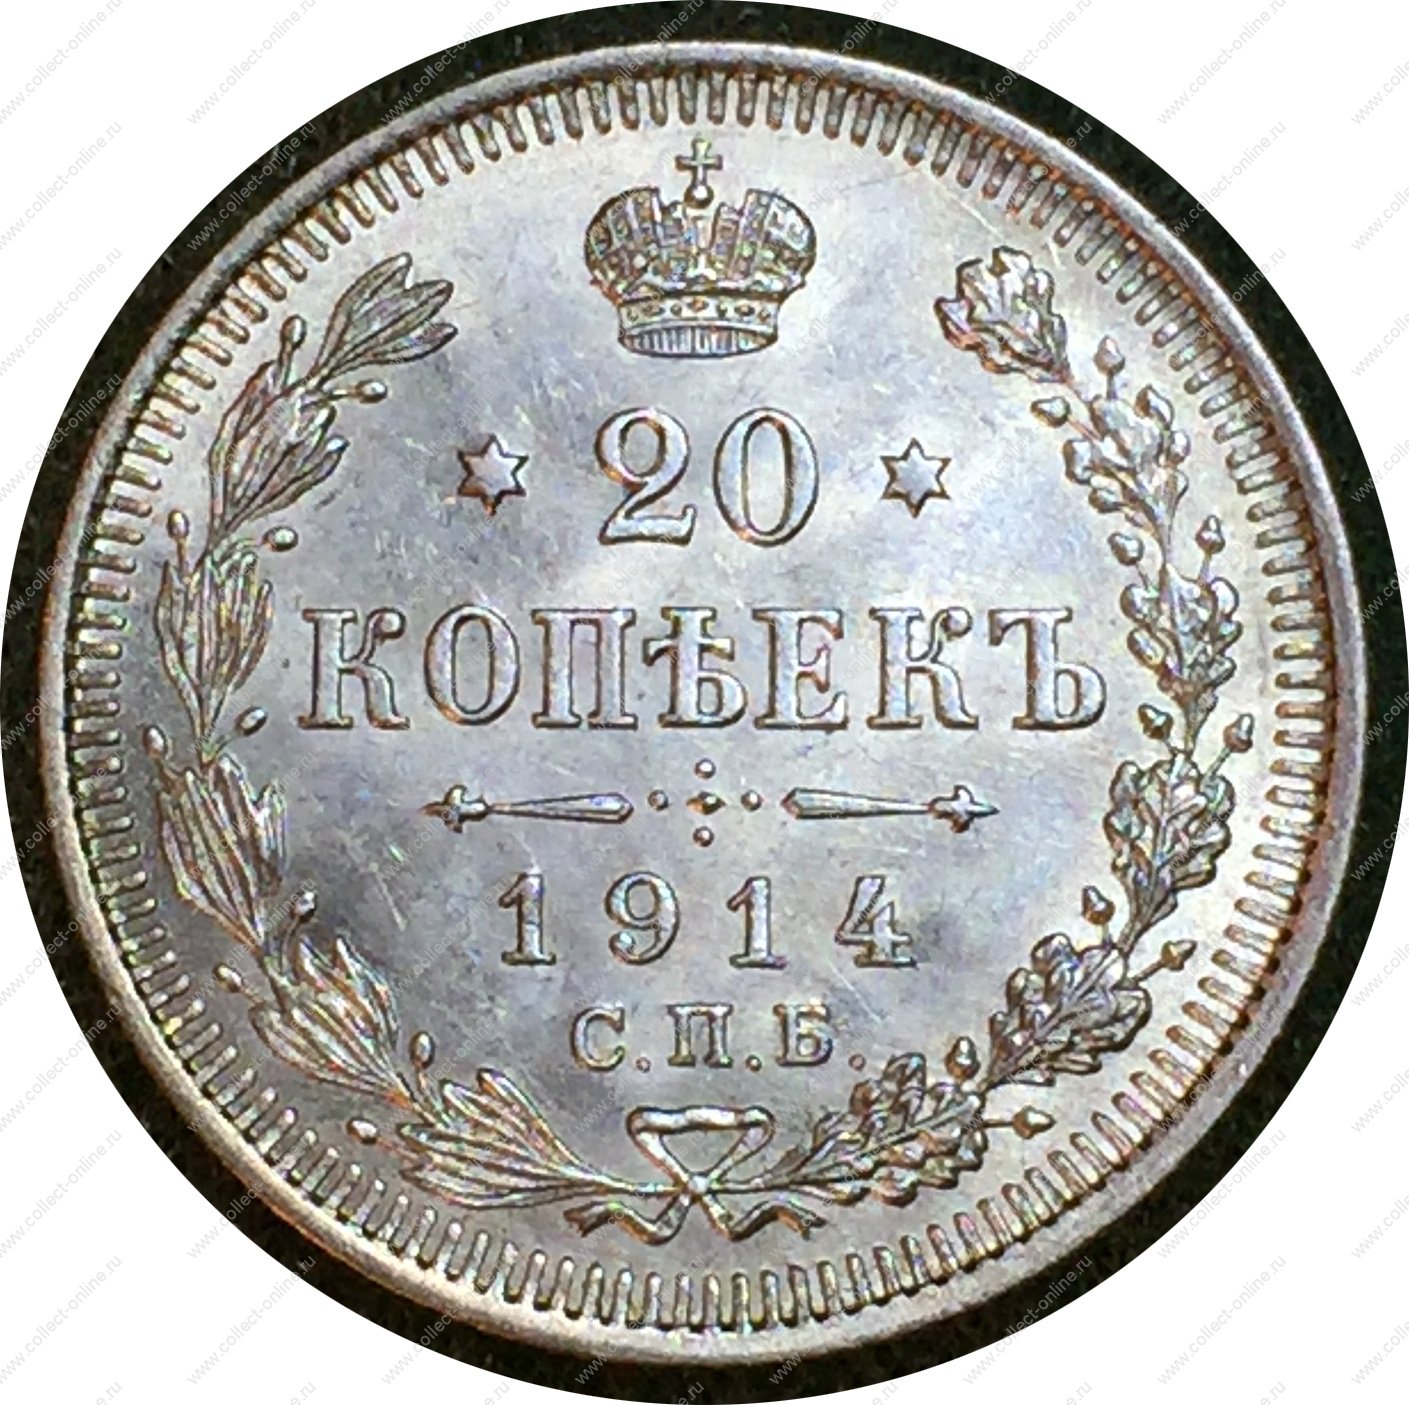 T е п п. Монета 20 копеек с двуглавым орлом. Золото России 1914. Орел Россия 1791.